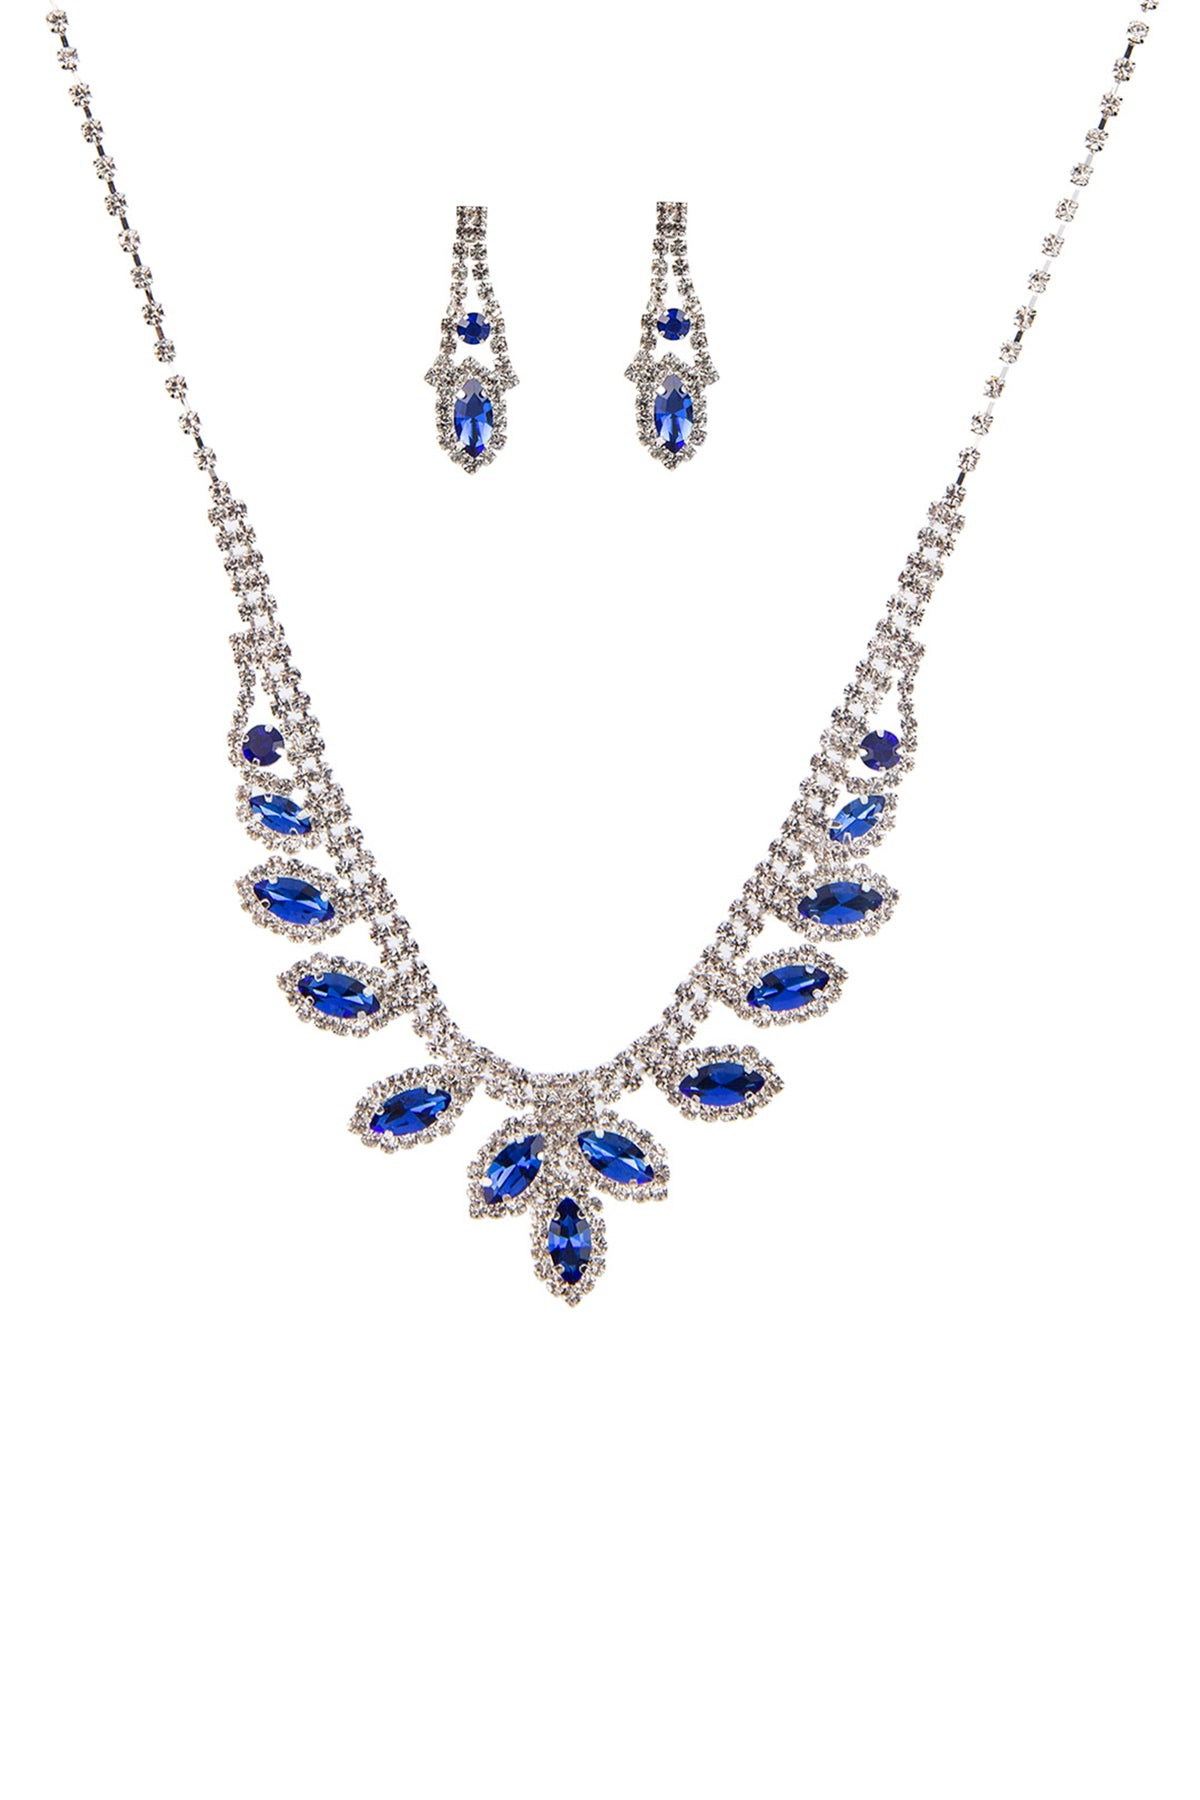 Rhinestone Marquise Wedding Necklace And Earring Set - Tigbuls Variety Fashion